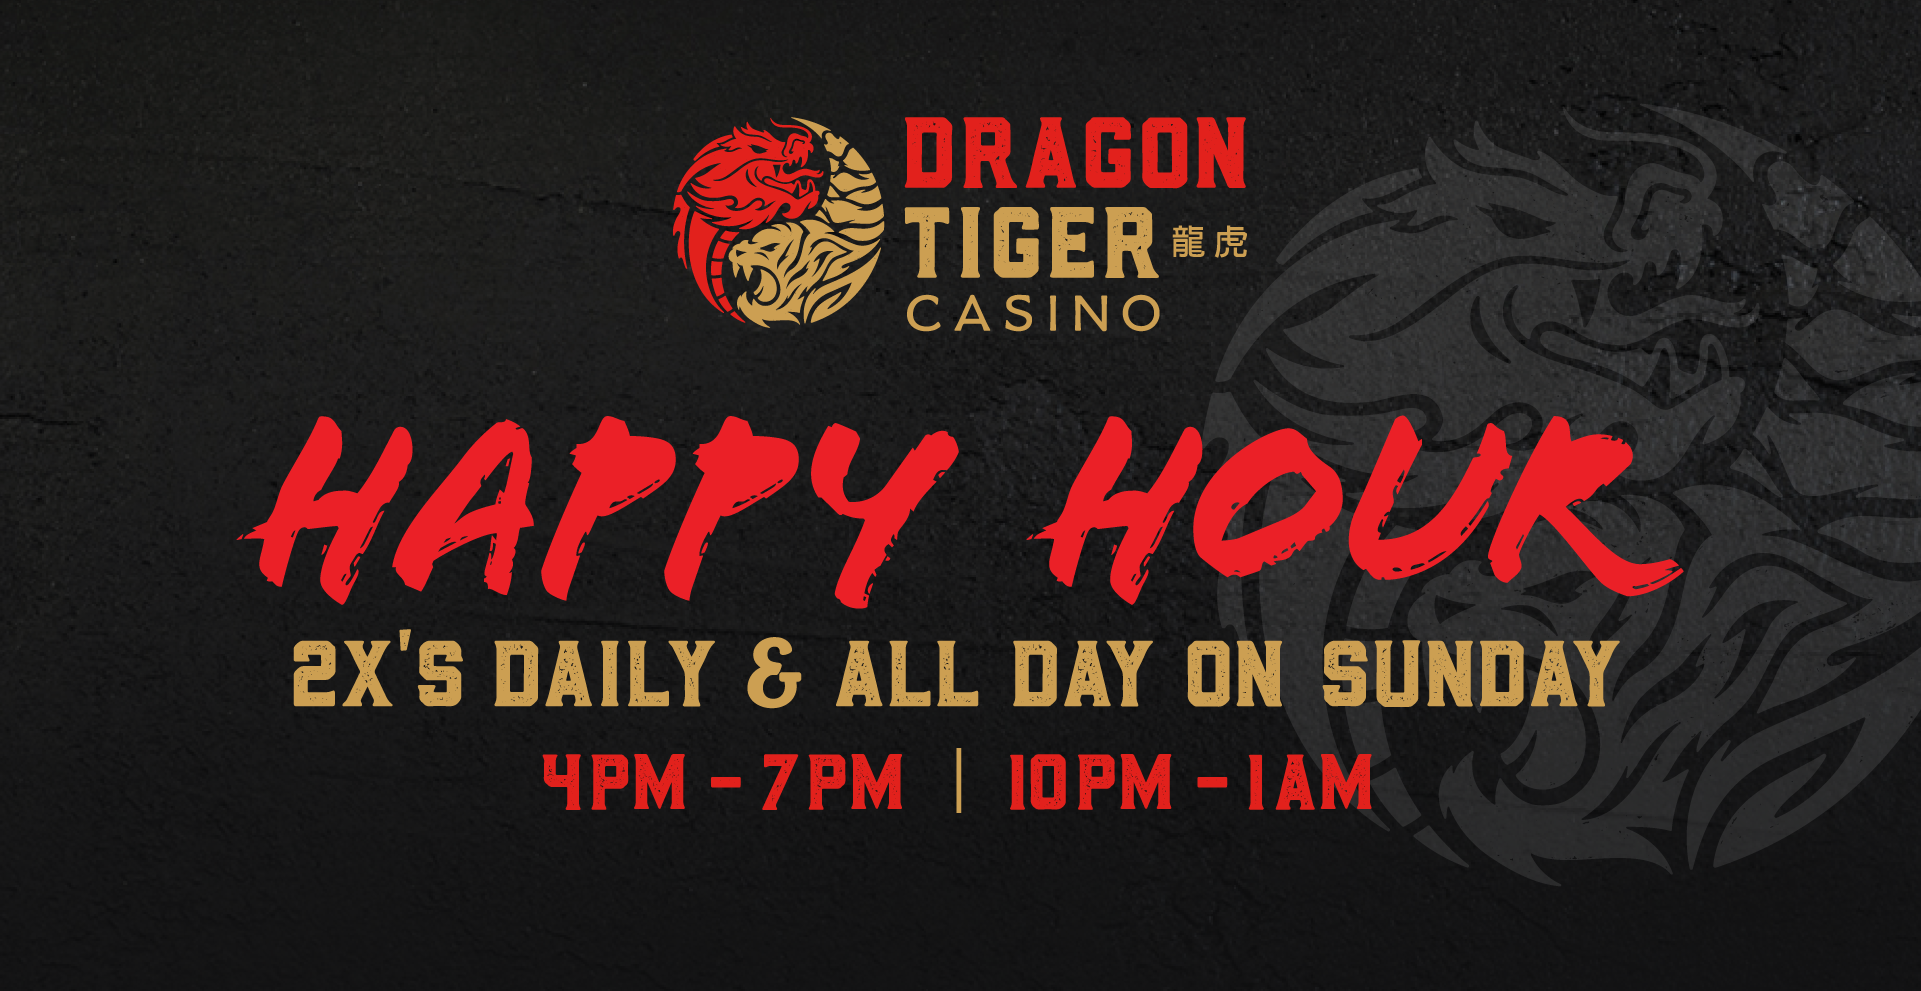 Dragon Tiger Casino Mountlake Terrace | Happy Hour